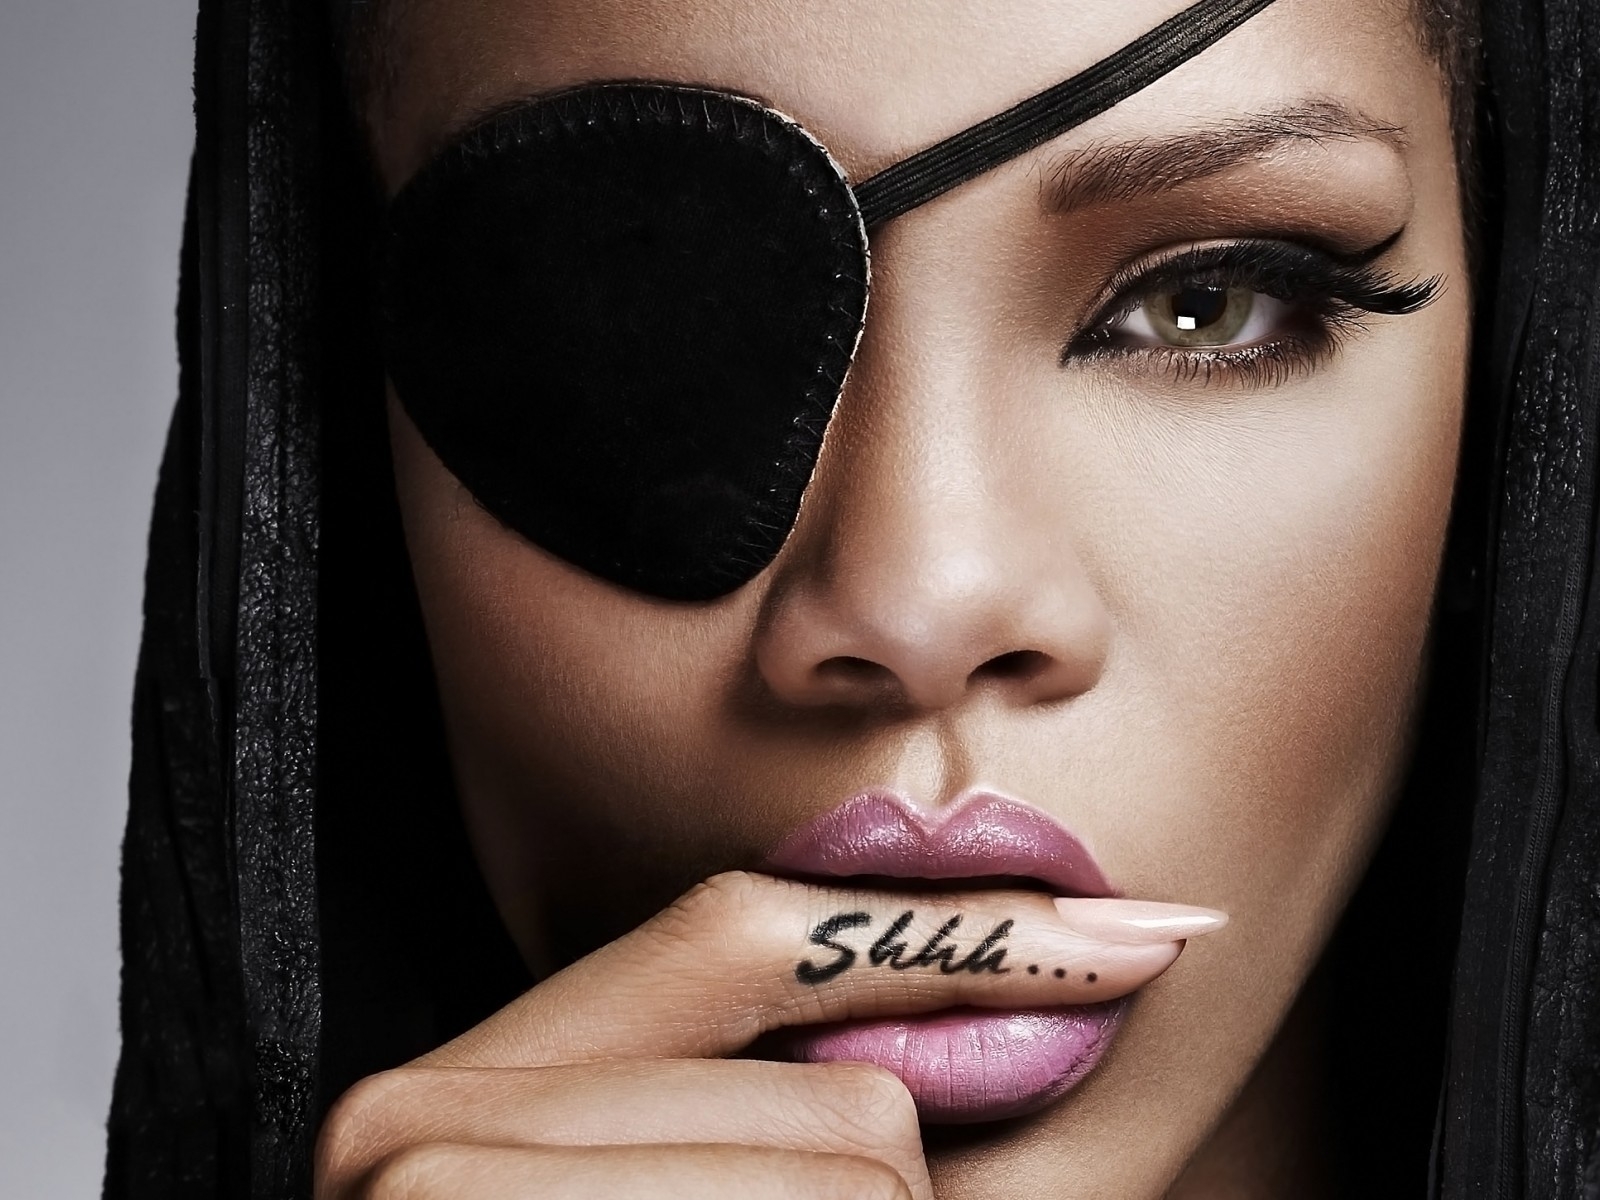 Rihanna Shhh Tattoo for 1600 x 1200 resolution